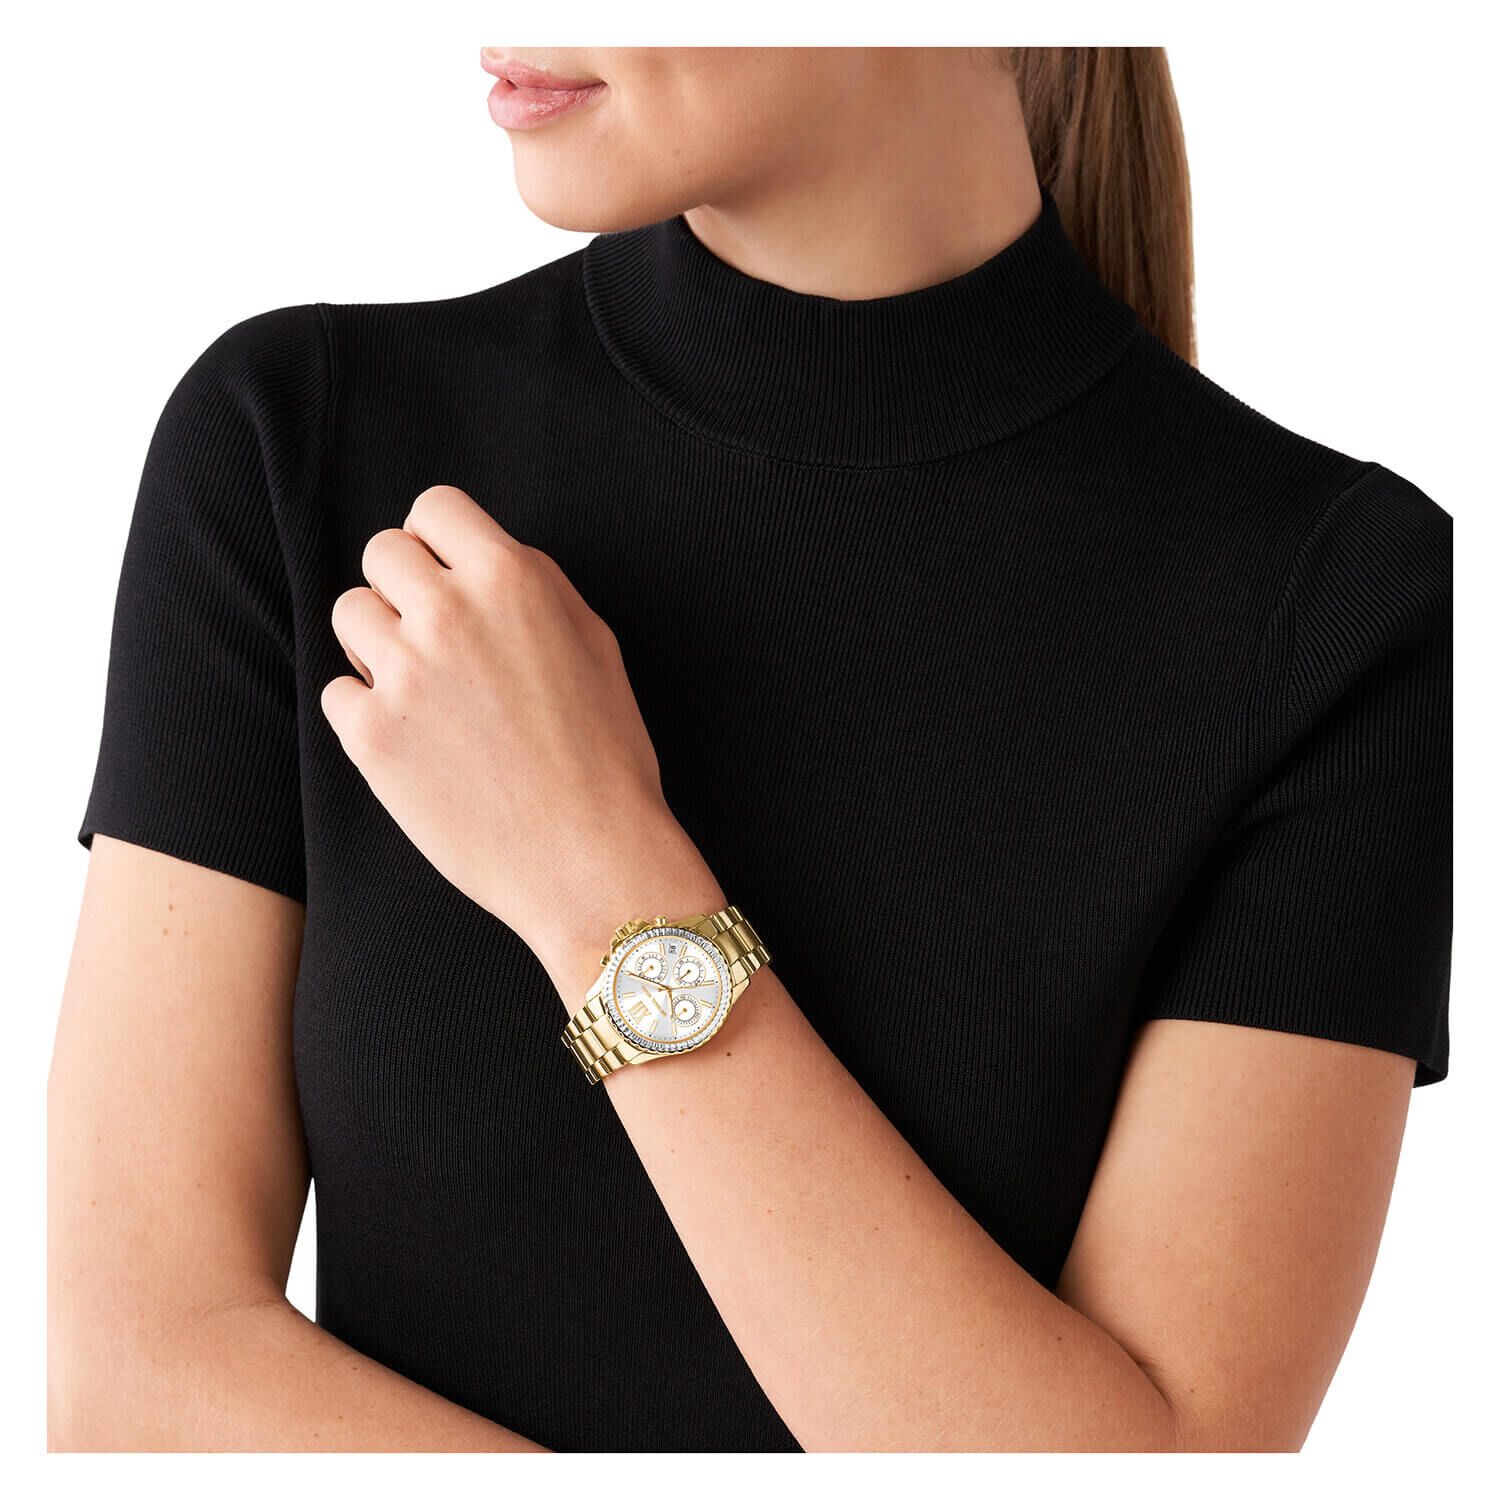 Michael Kors MK6067 Colette Womens Silver Watch 34mm